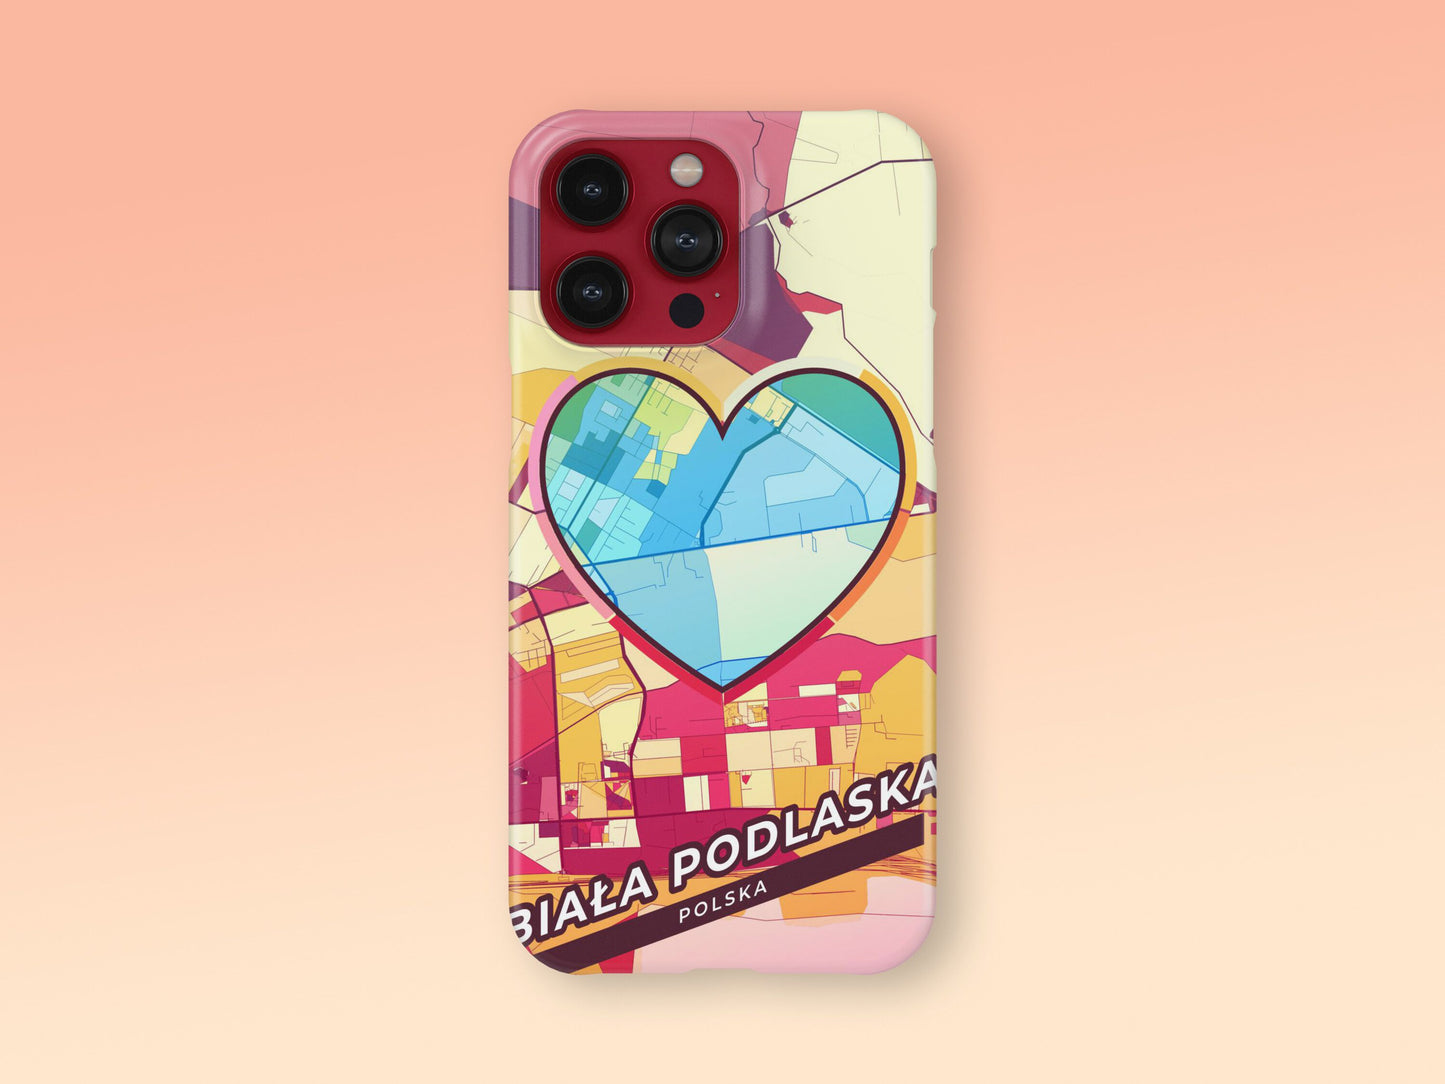 Biała Podlaska Poland slim phone case with colorful icon. Birthday, wedding or housewarming gift. Couple match cases. 2